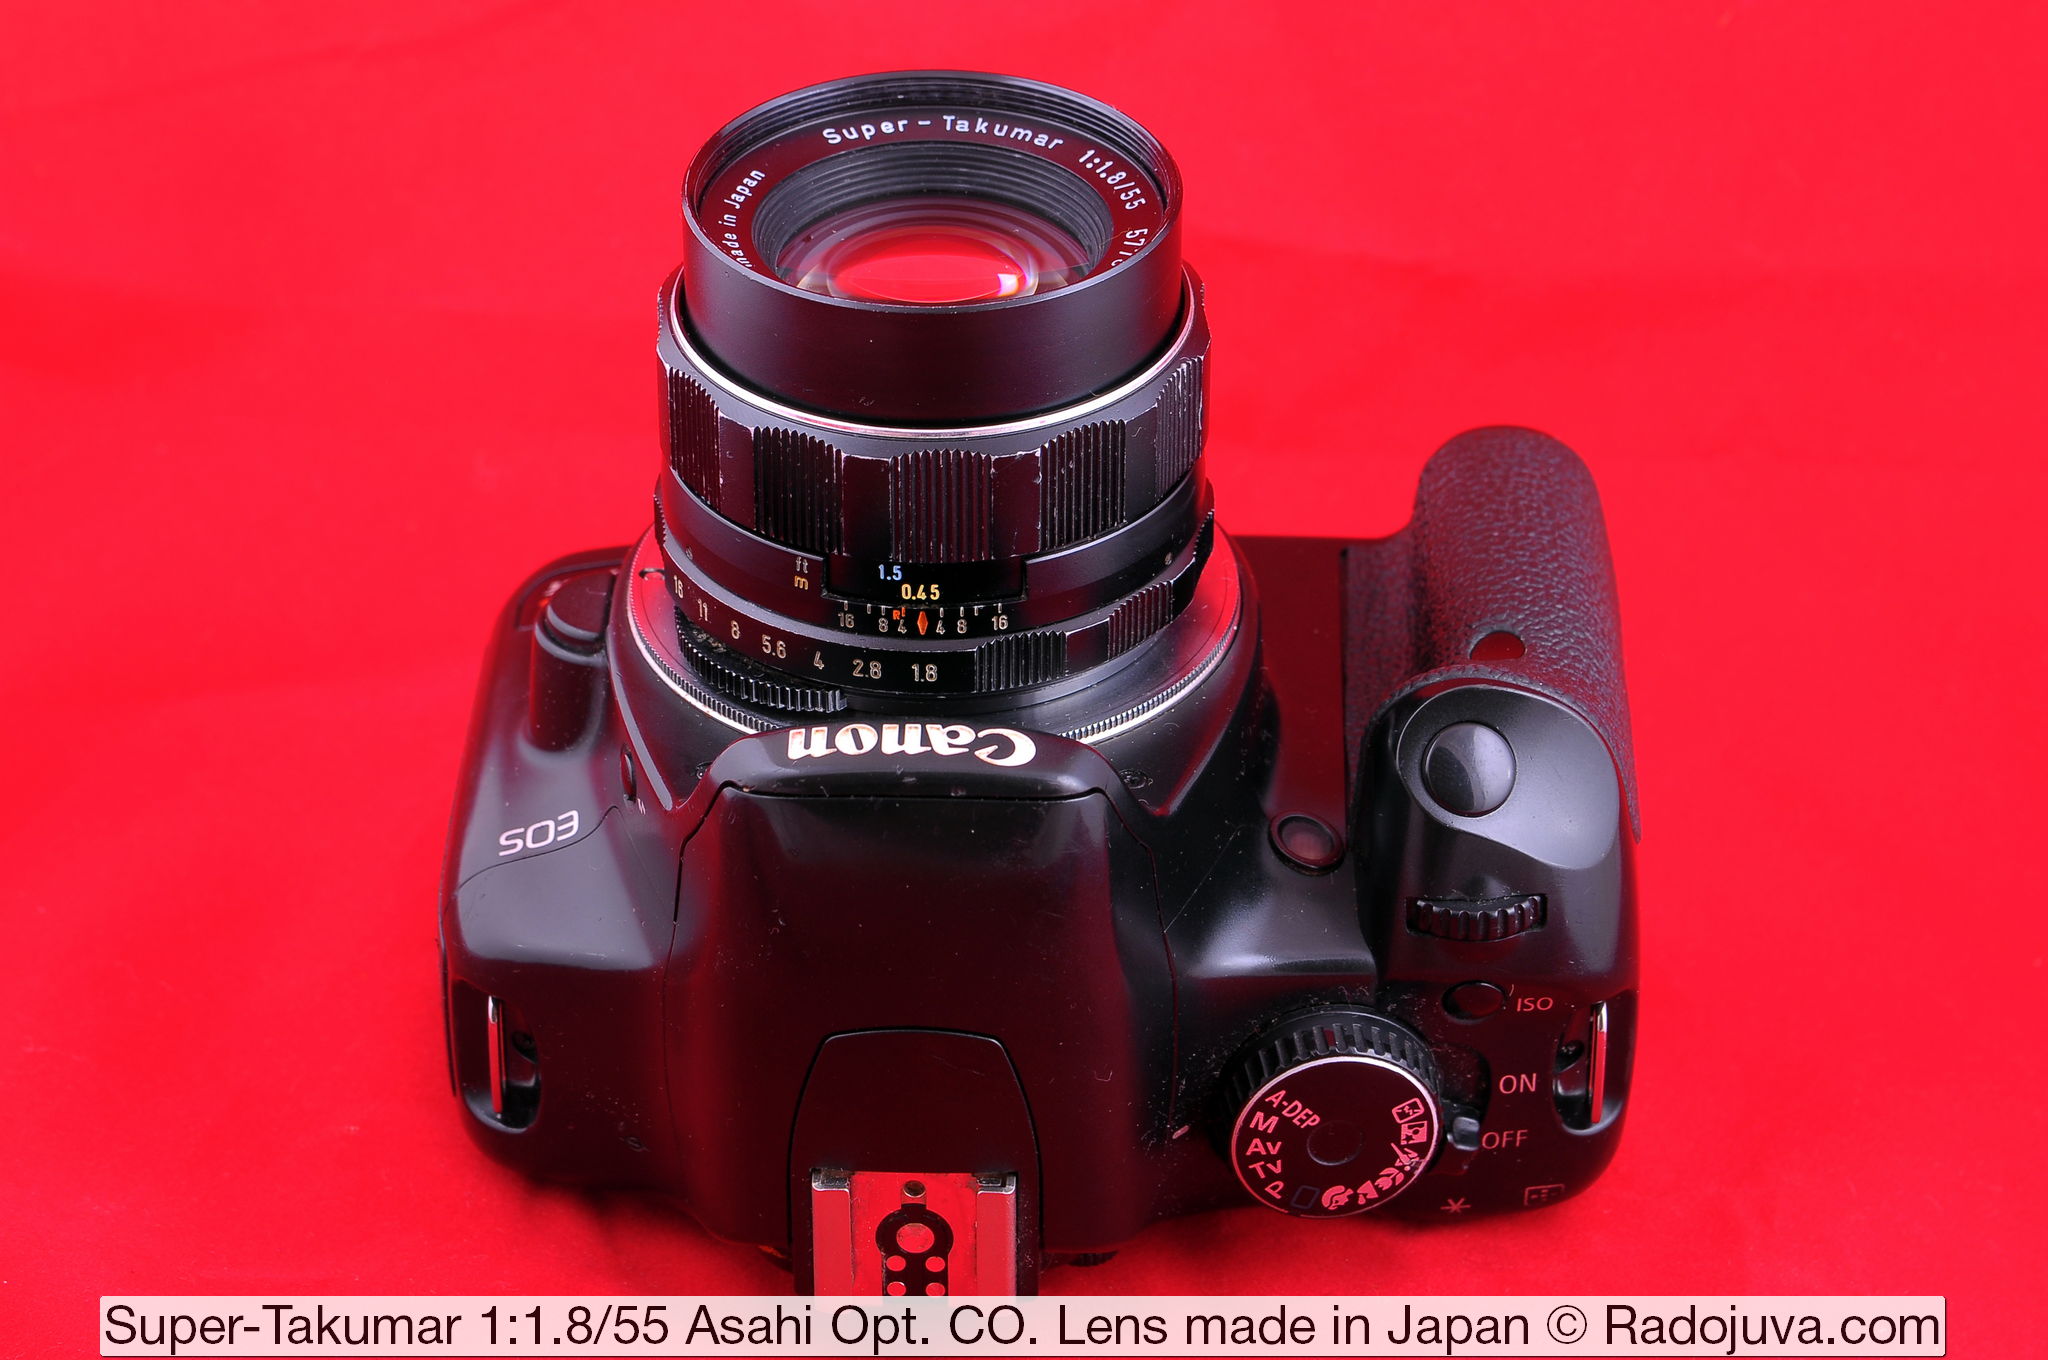 Super-Takumar 1:1.8/55 Asahi Opt. Co. Lente fabricada en Japón. Lente mostrado en Canon EOS DIGITAL Rebel XSi DSLR. El objetivo se montó en la cámara con un adaptador M42-Canon EOS con chip.